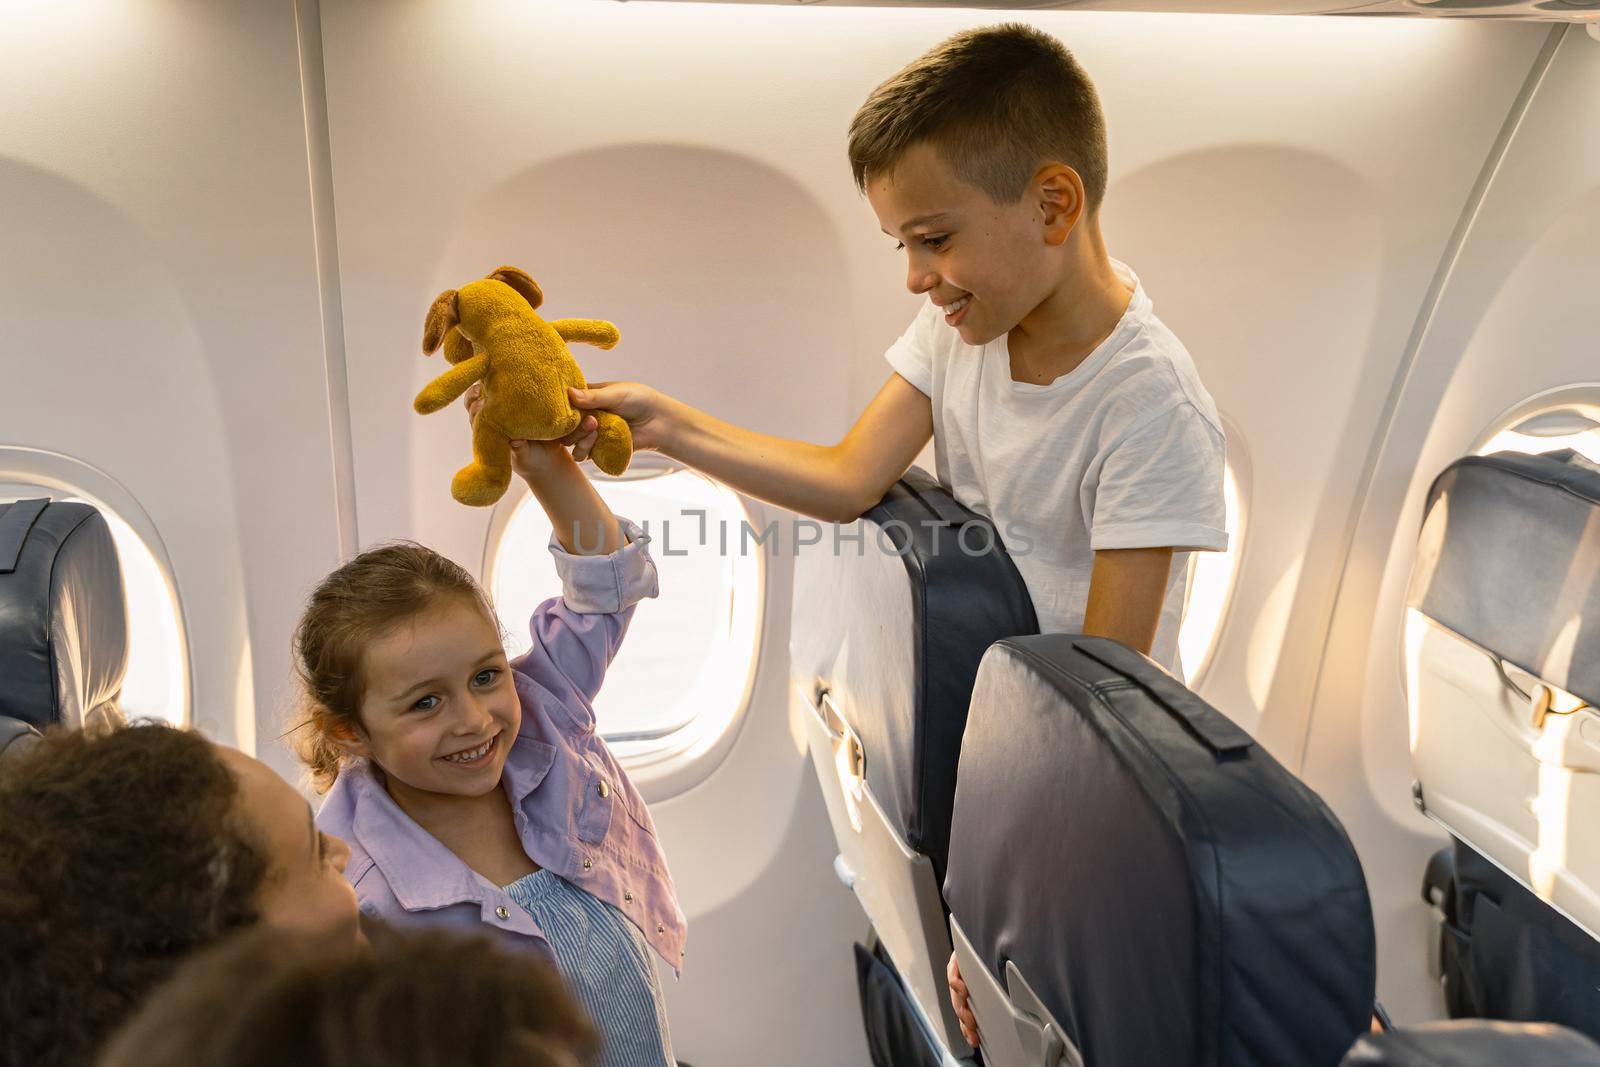 Cute kids playing on board the plane near the window by Yaroslav_astakhov